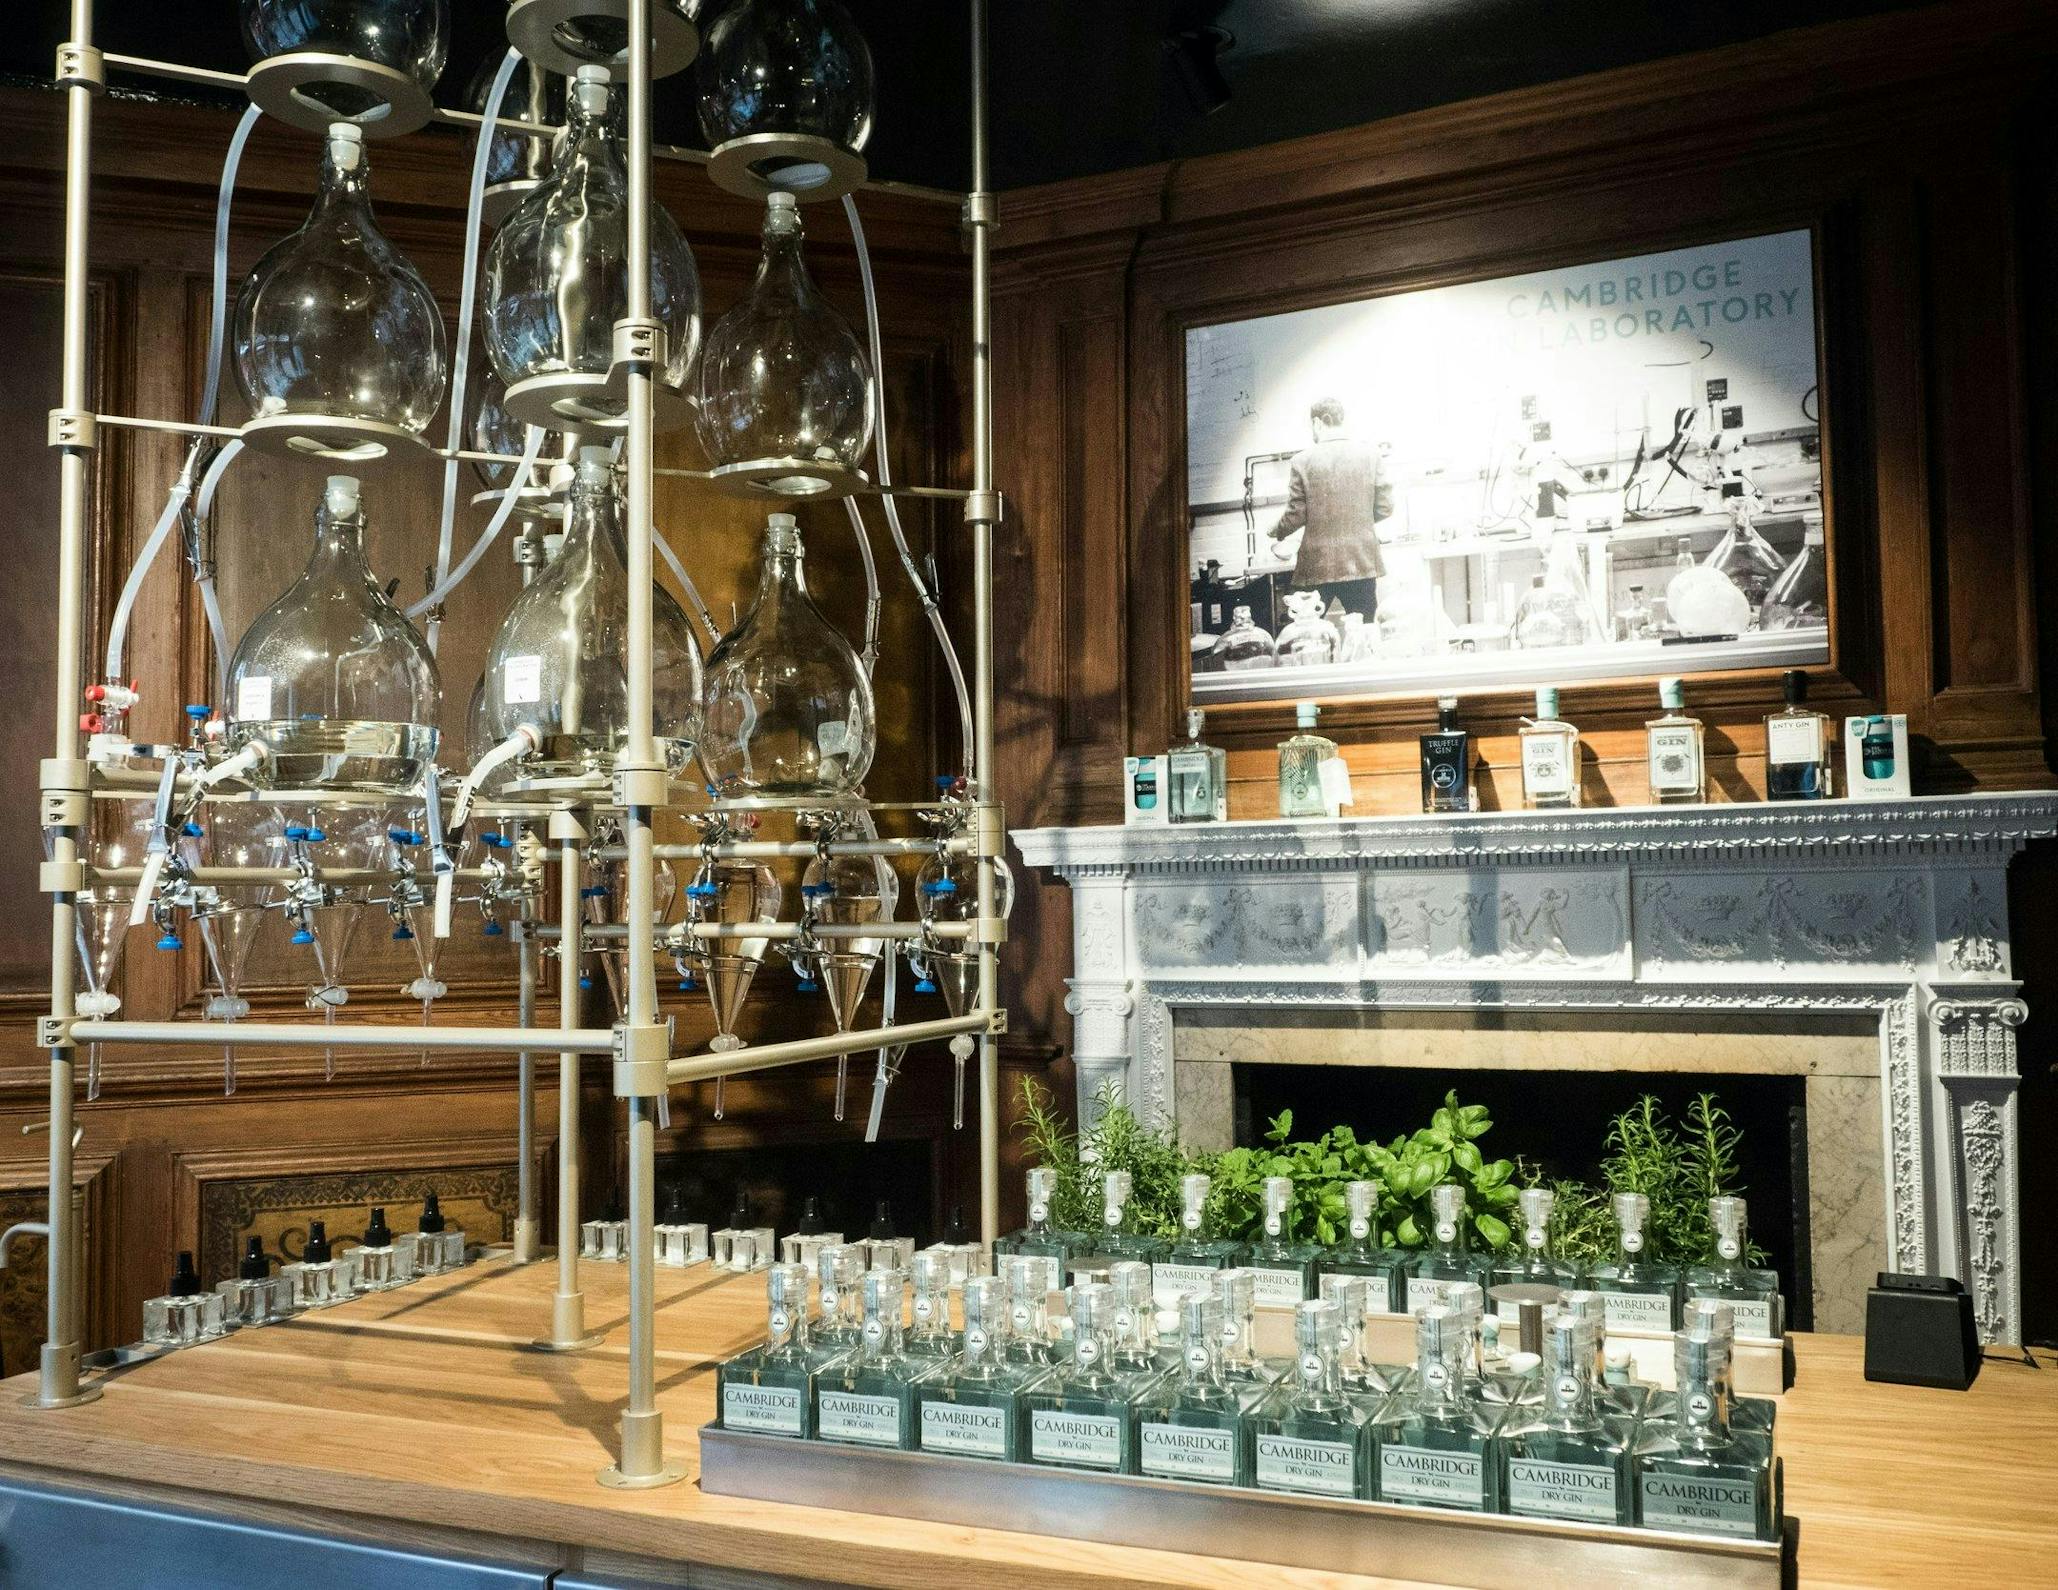 Cambridge Distillery has its own Laboratory